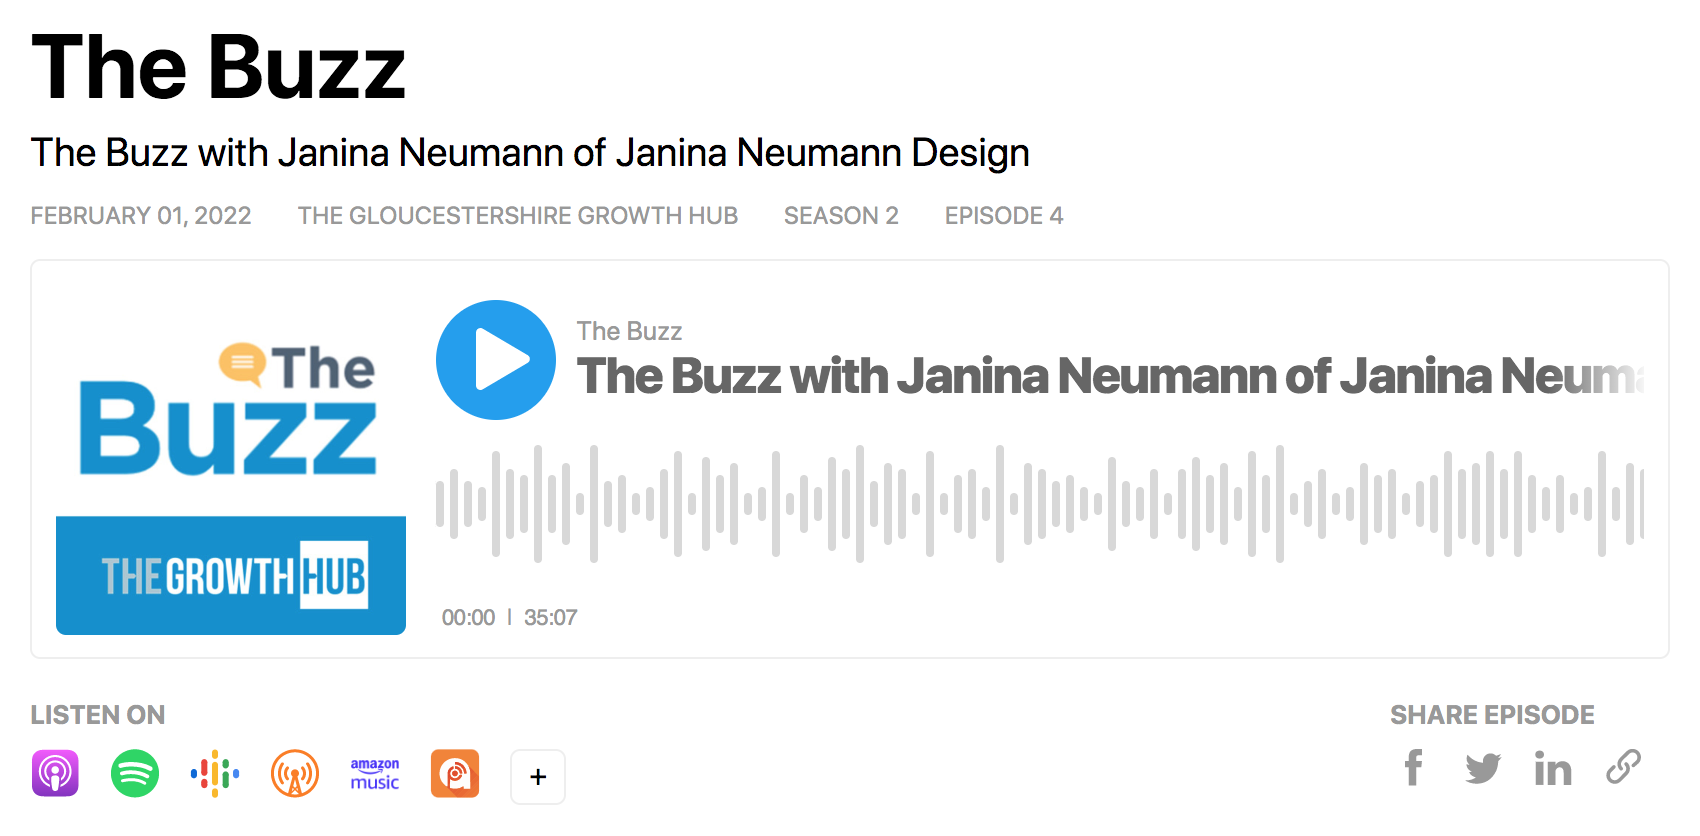 The Buzz with Janina Neumann of Janina Neumann Design